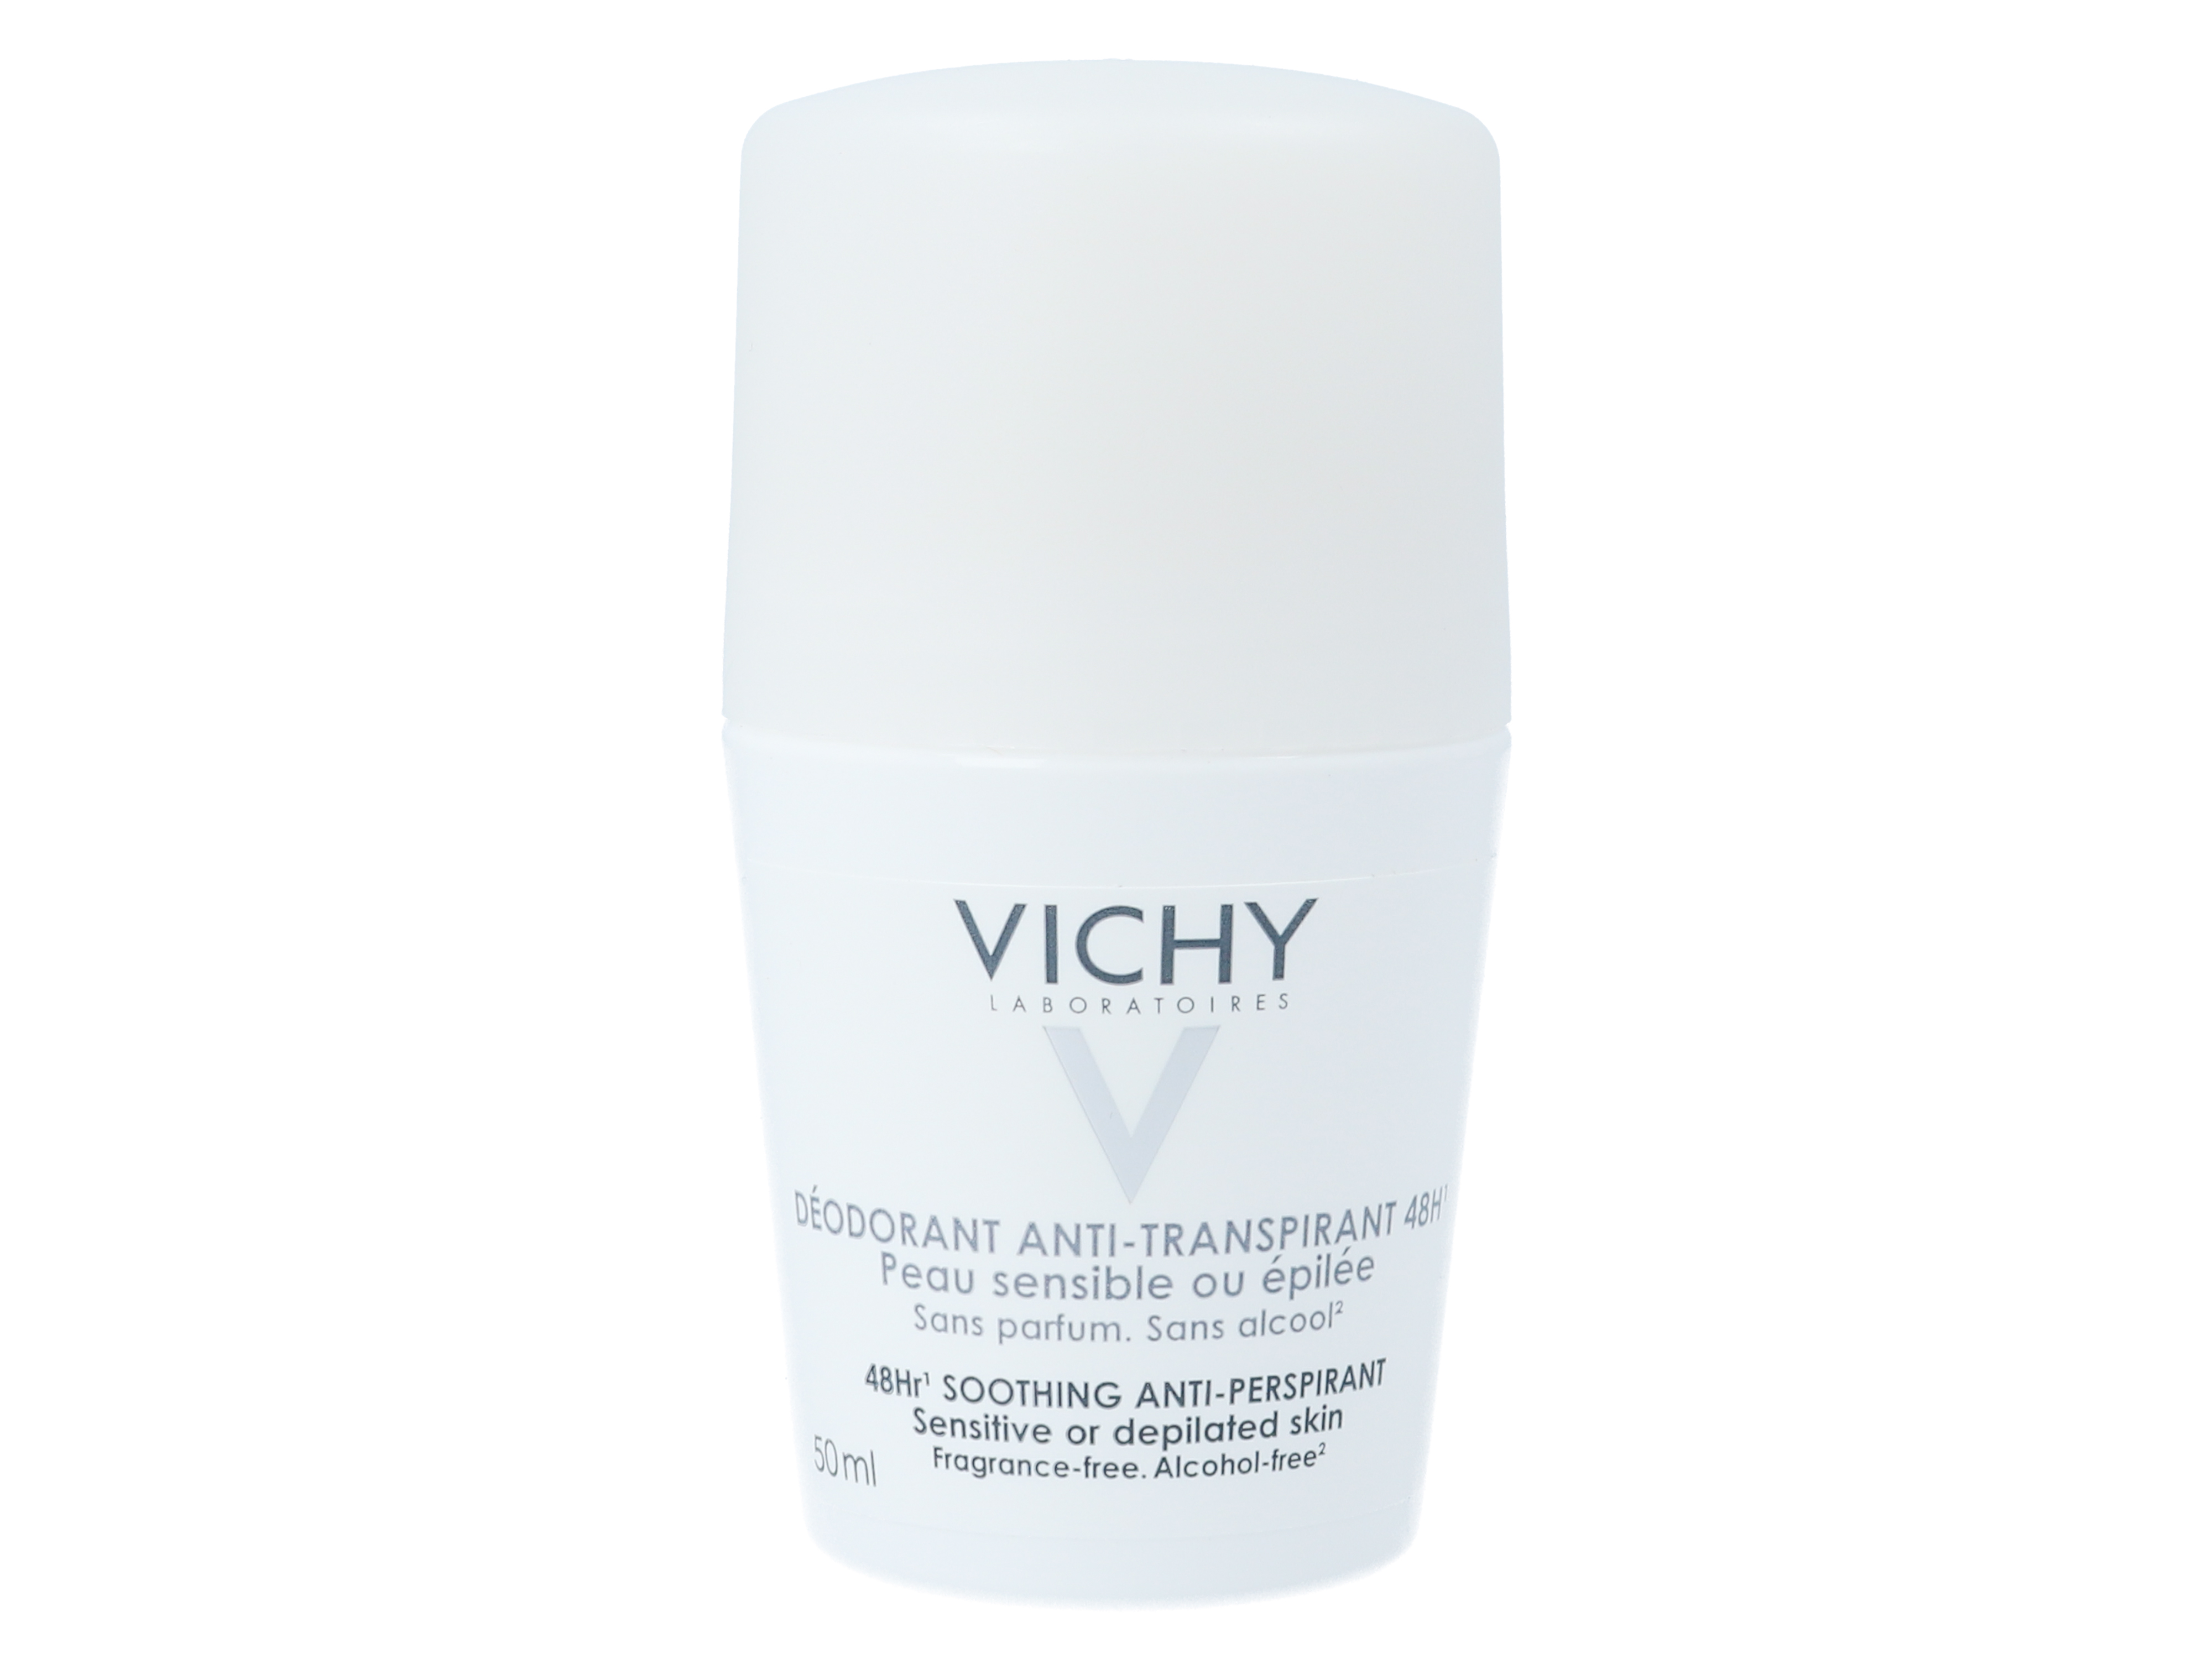 Vichy 48Hr Soothing Anti-Perspirant, Uten parfyme, 50 ml